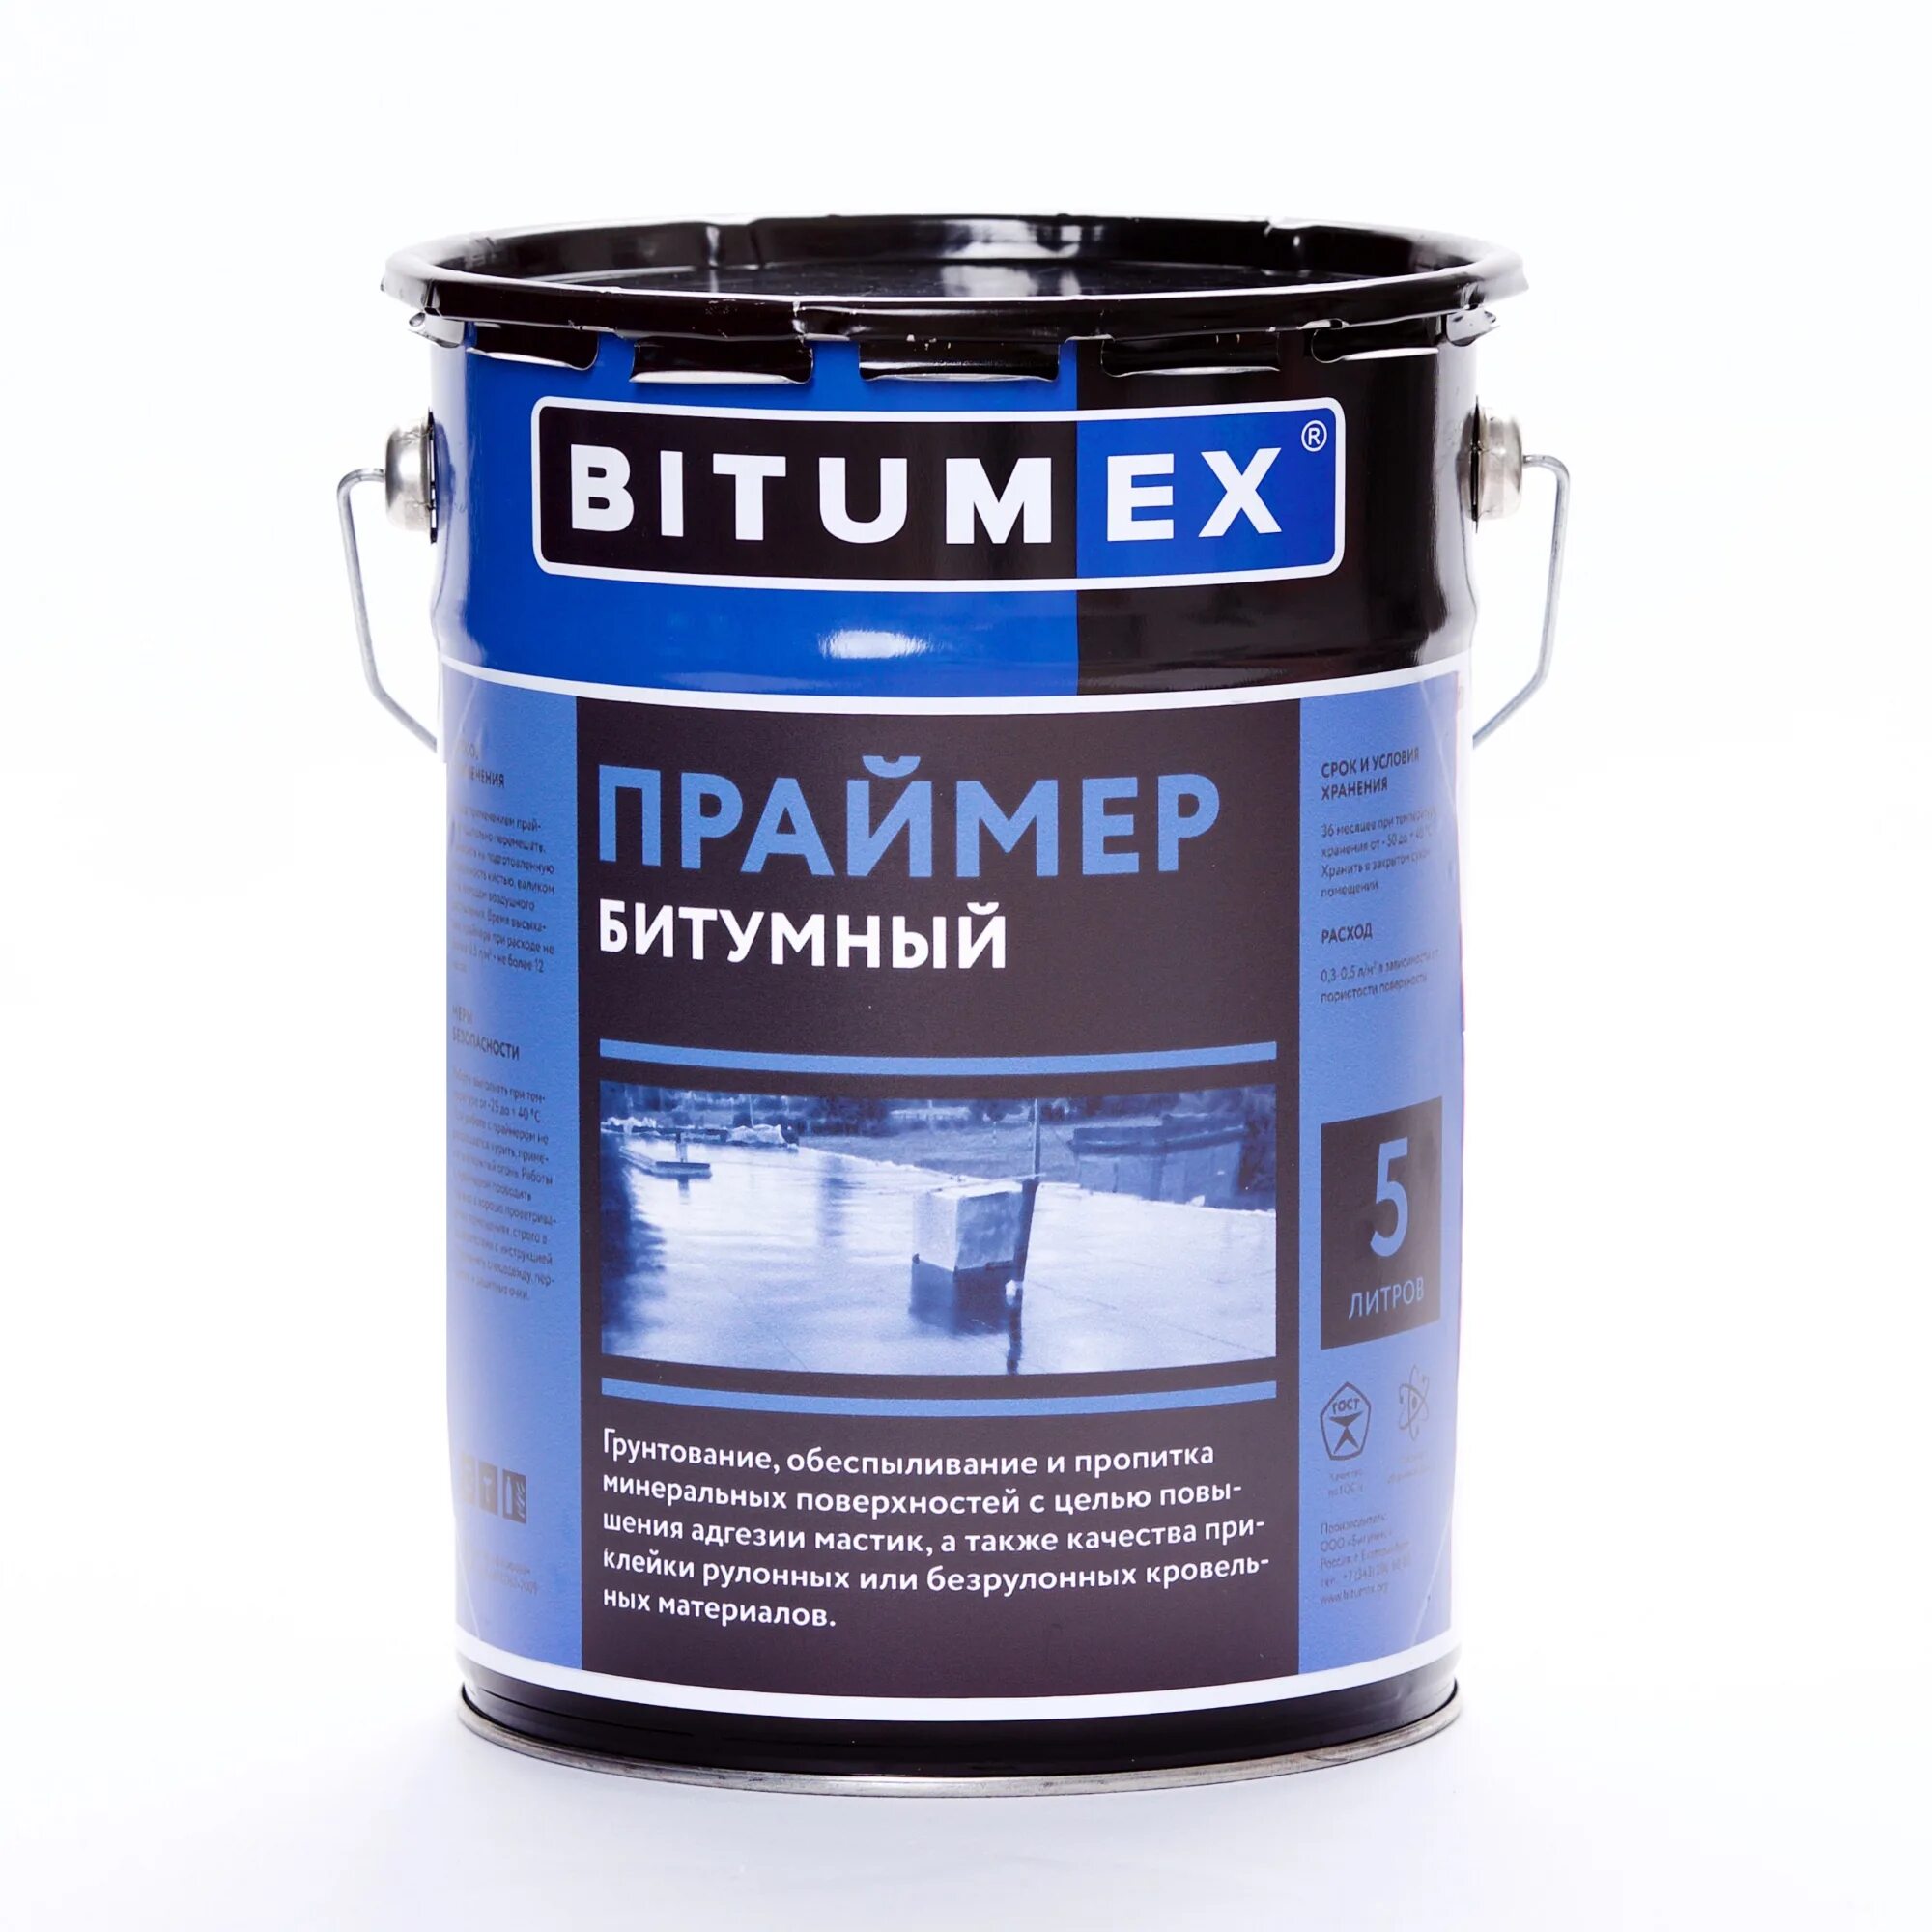 Праймер BITUMEX битумный 5л. Праймер битумный BITUMEX эконом, 21,5л. Мастика битумная гидроизоляционная BITUMEX эконом, 22кг. Праймер битумный SMARTMIX 5л.. Праймер времени